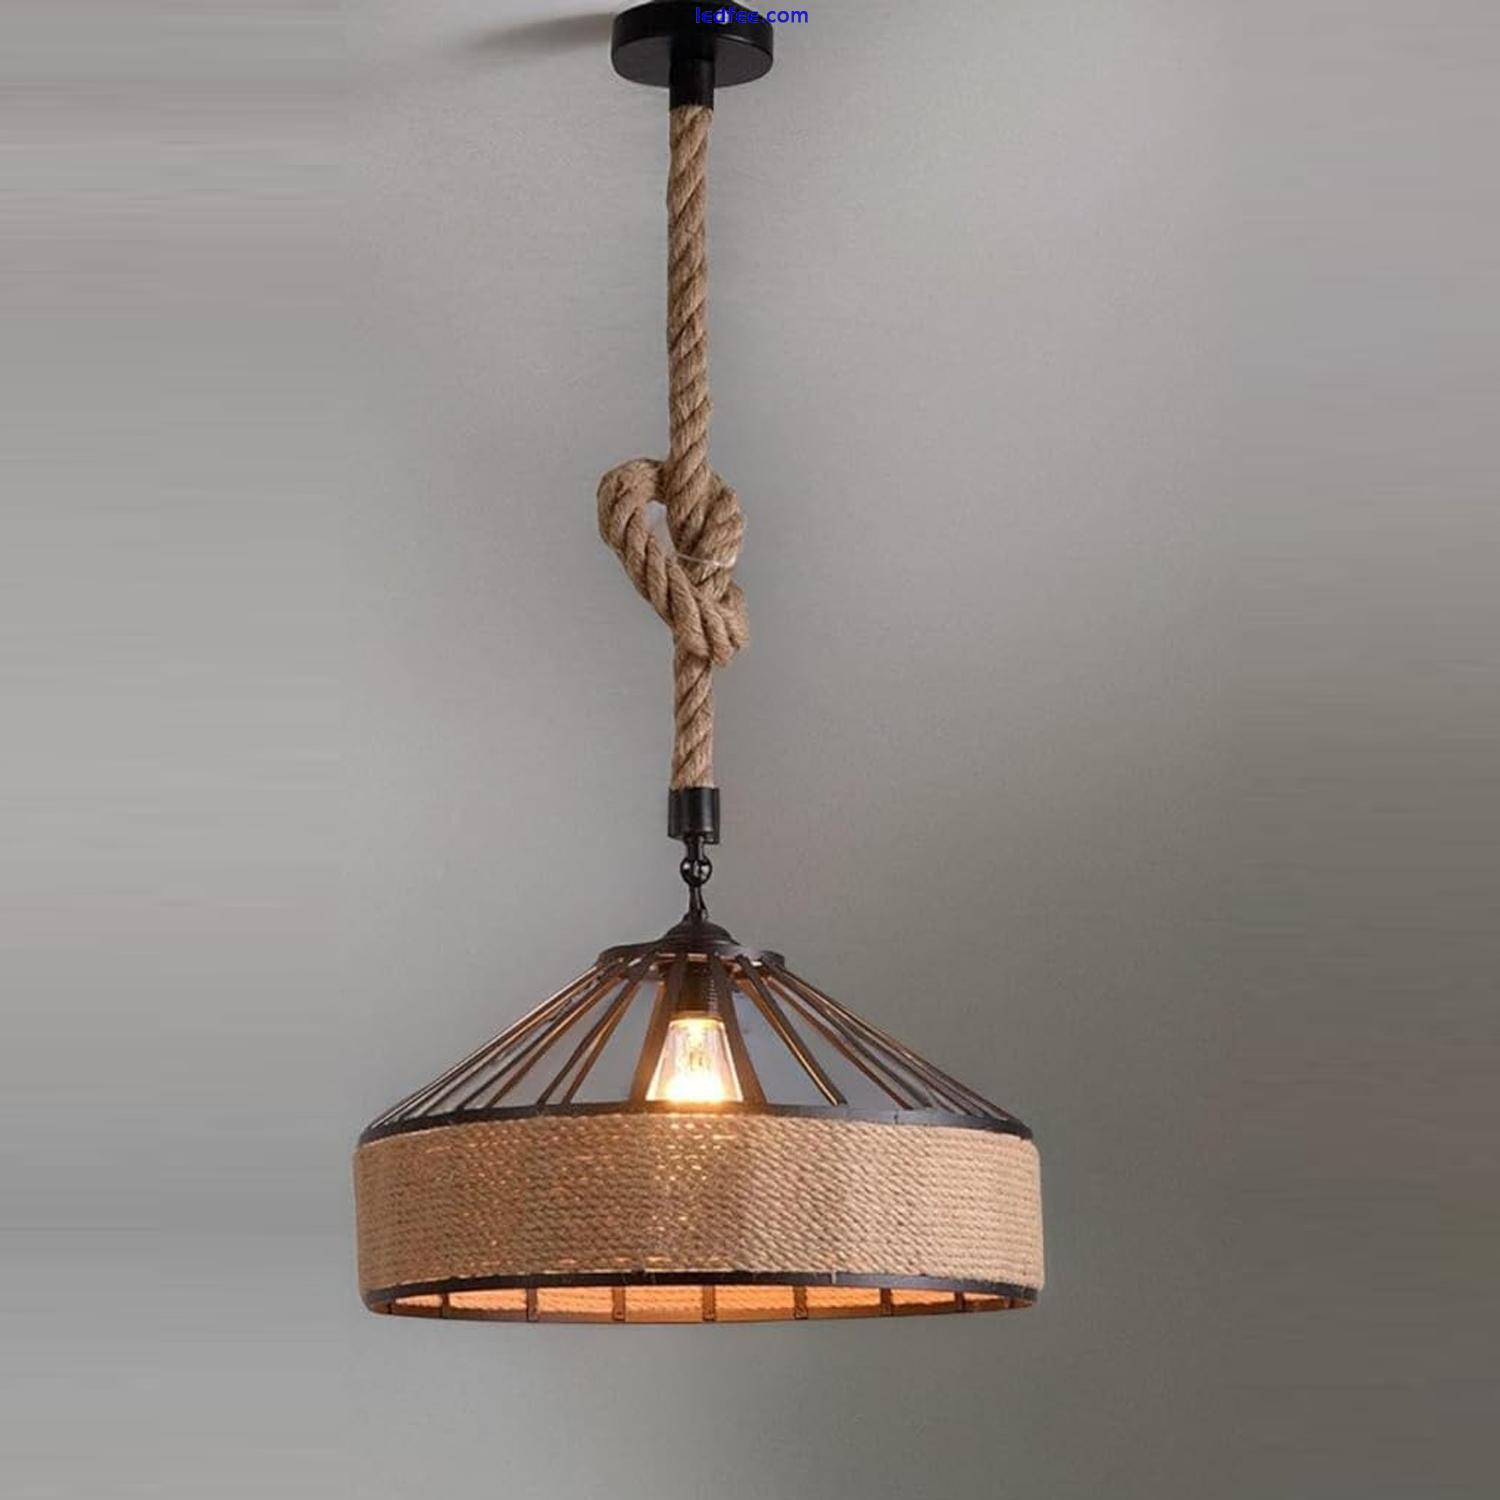 Vintage Industrial Ceiling Light Loft Hemp Rope Pendant Light Retro Lamp Iron UK 0 